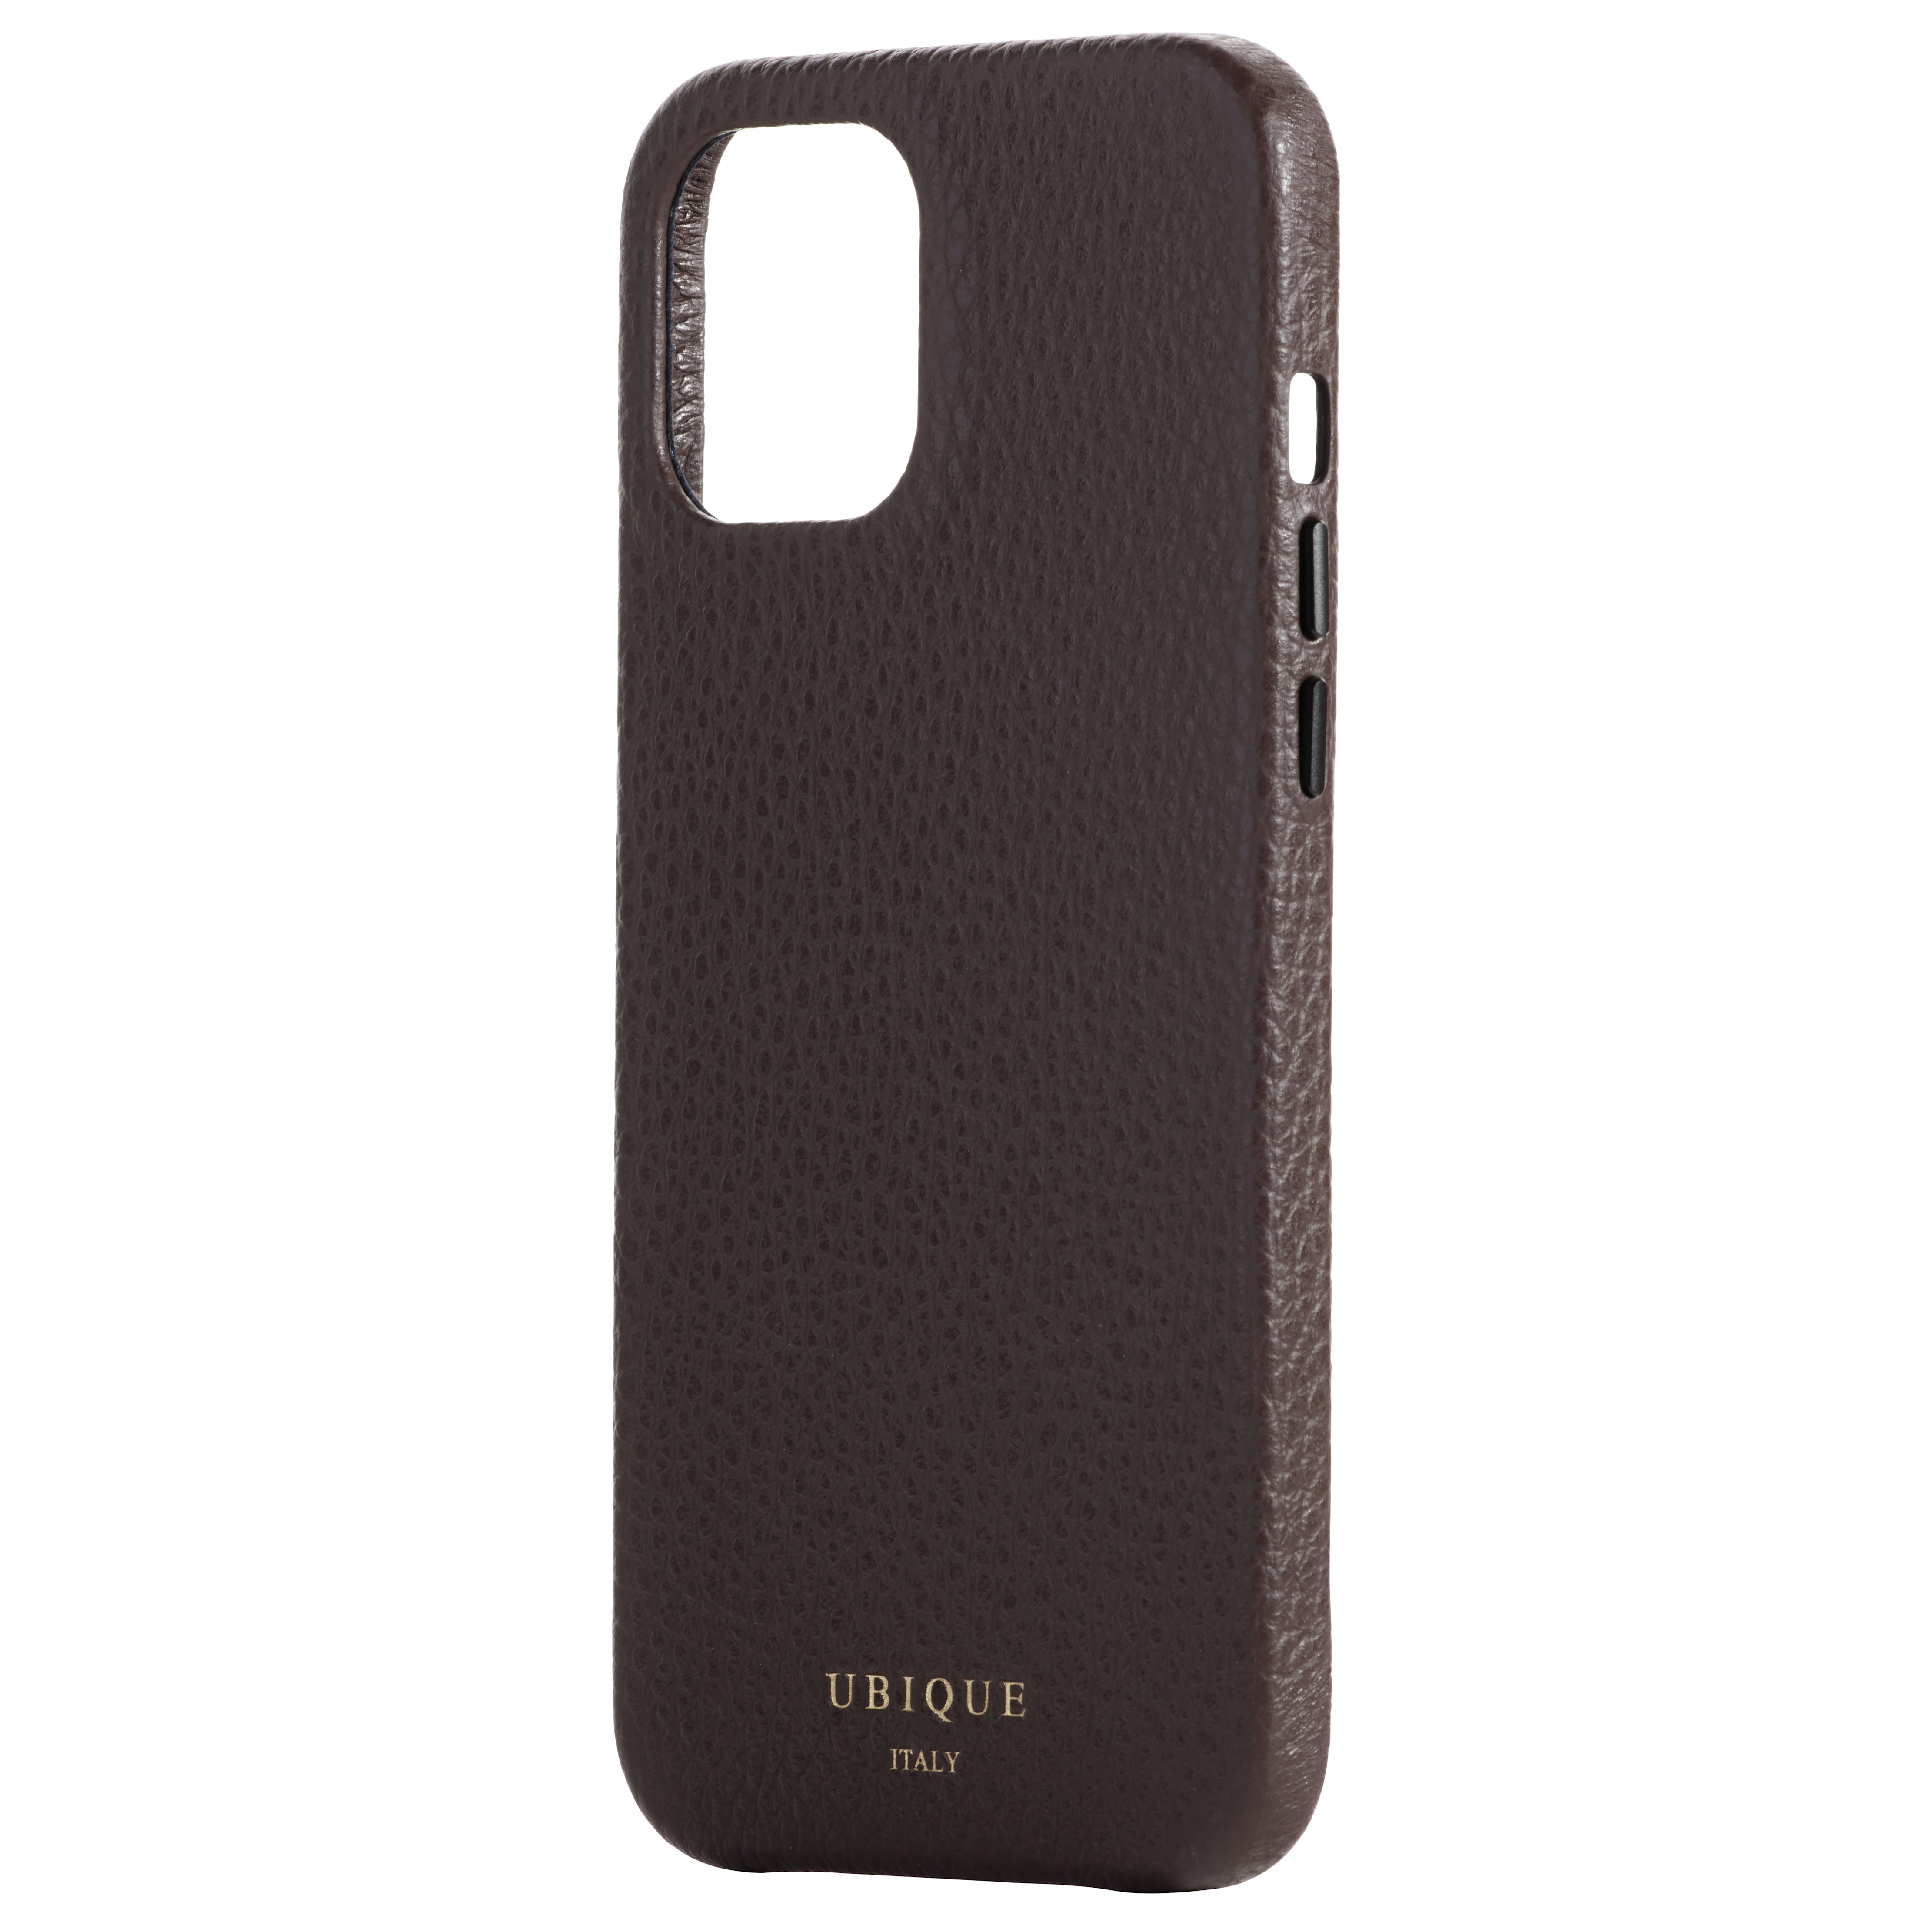 Ubique Italy Luxury iPhone Case 12 Pro Max Pebble Grain Leather Dark Walnut Angled